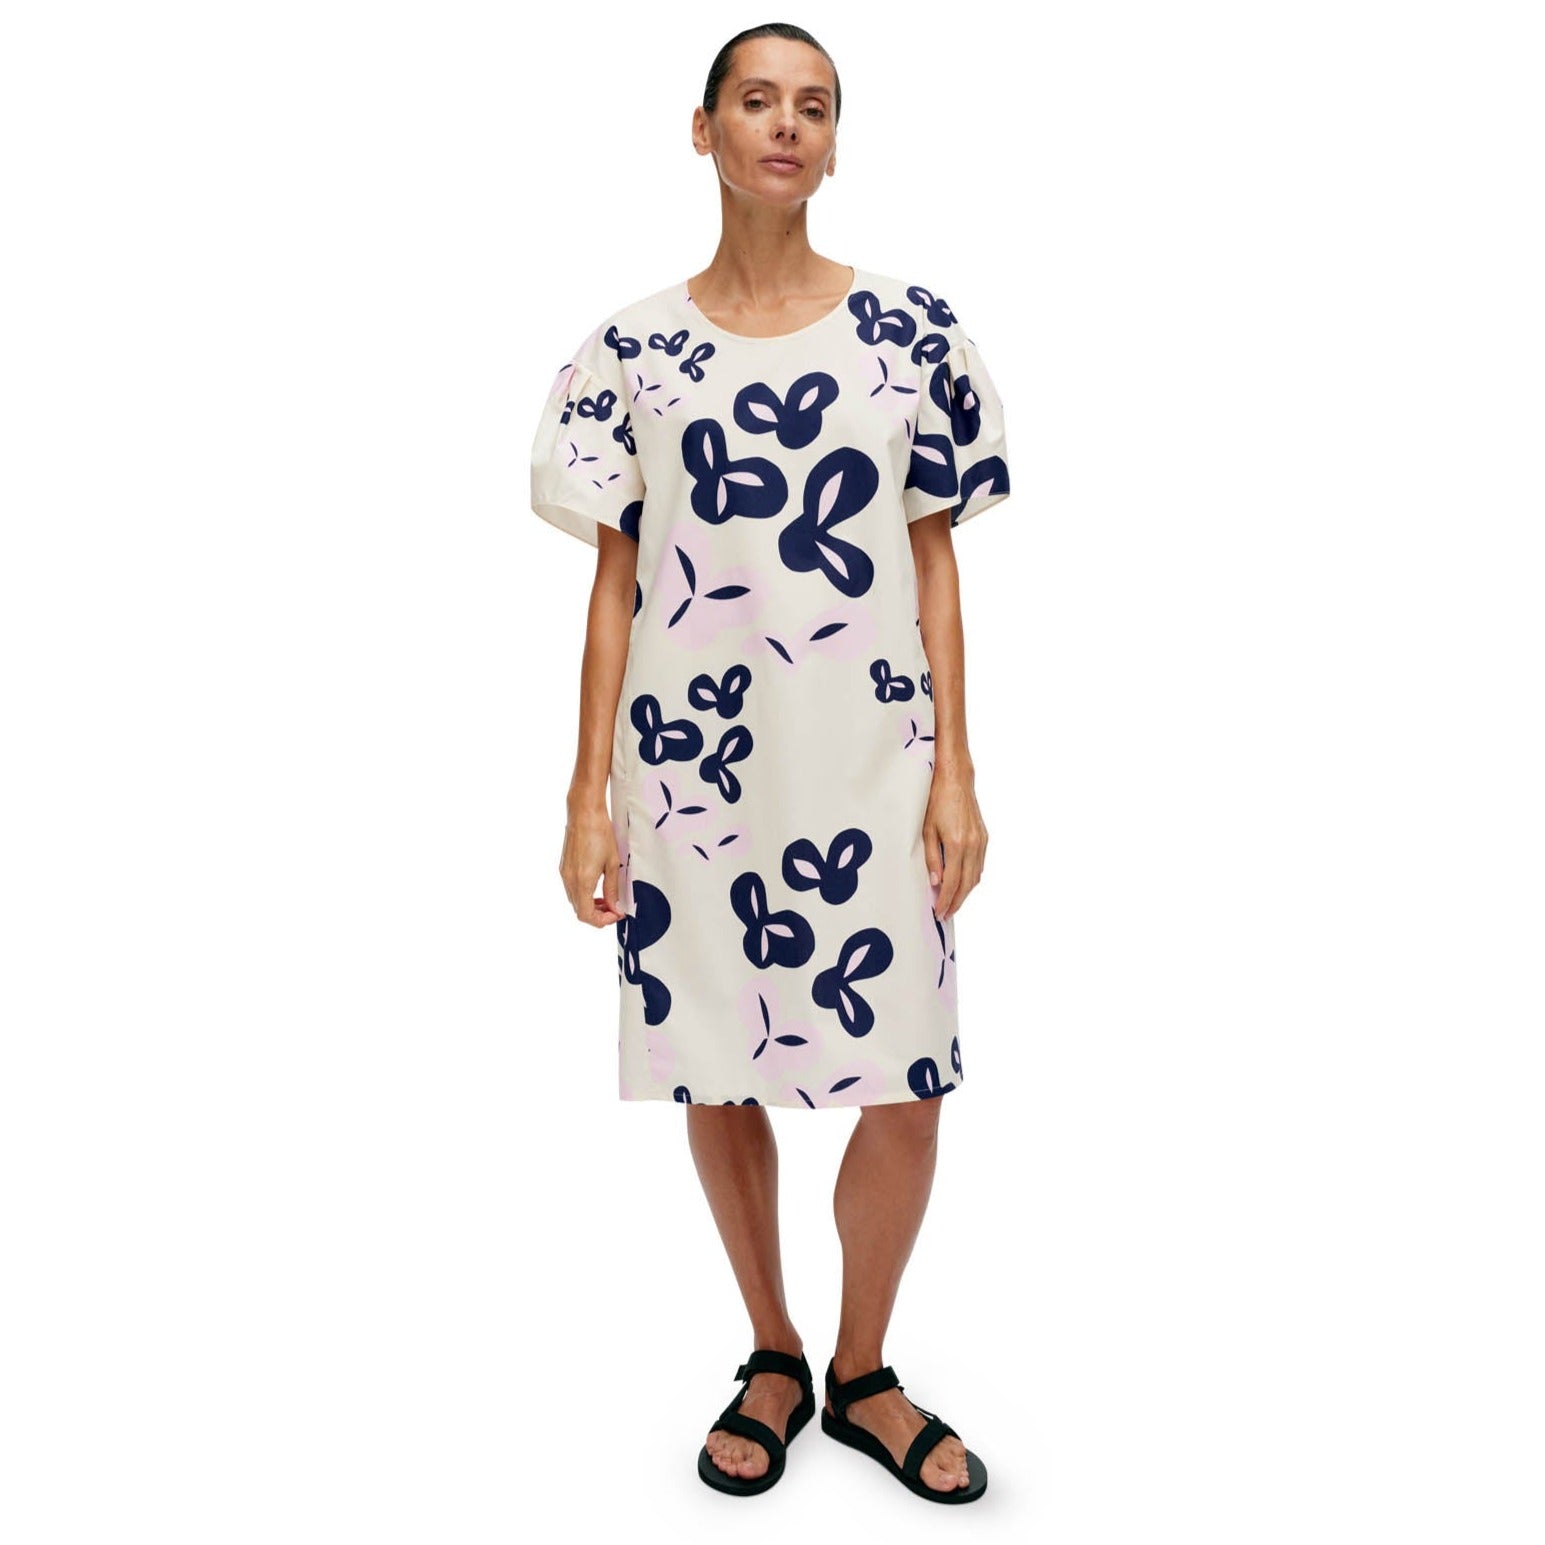 Marimekko Avomeri Poiminto Cotton Dress, Off White, Light Pink & Navy